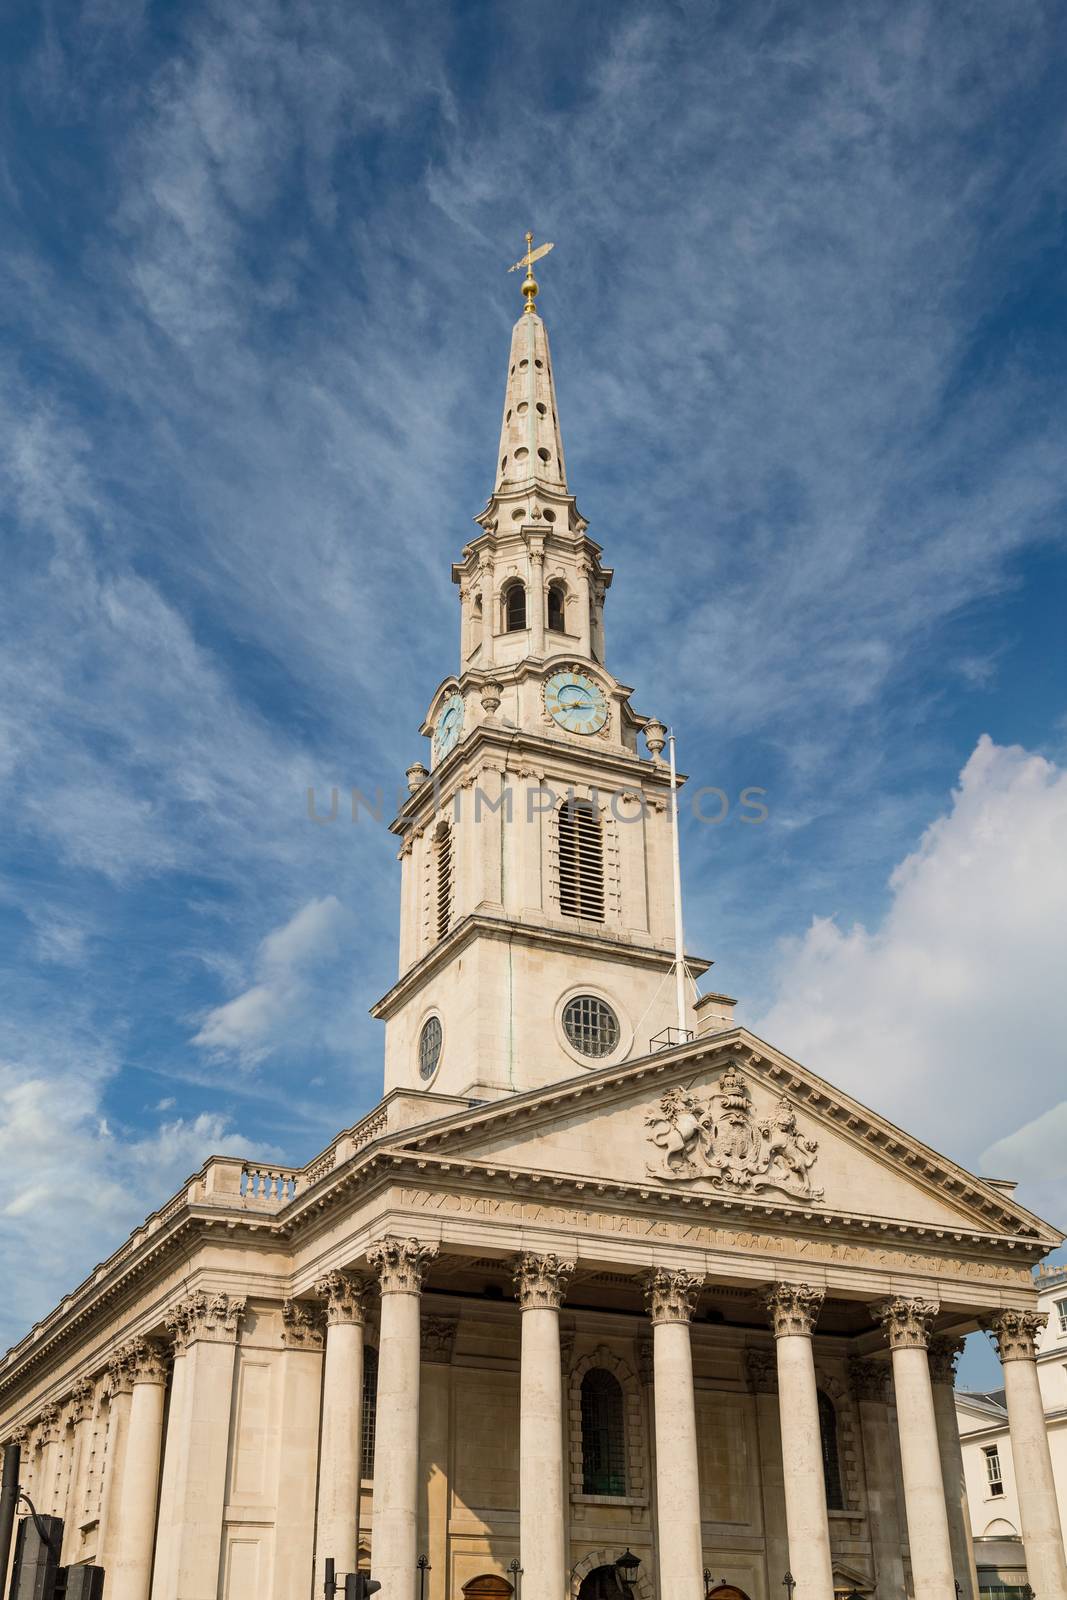 St Martin in the Fields church on Trafalgar Square in London